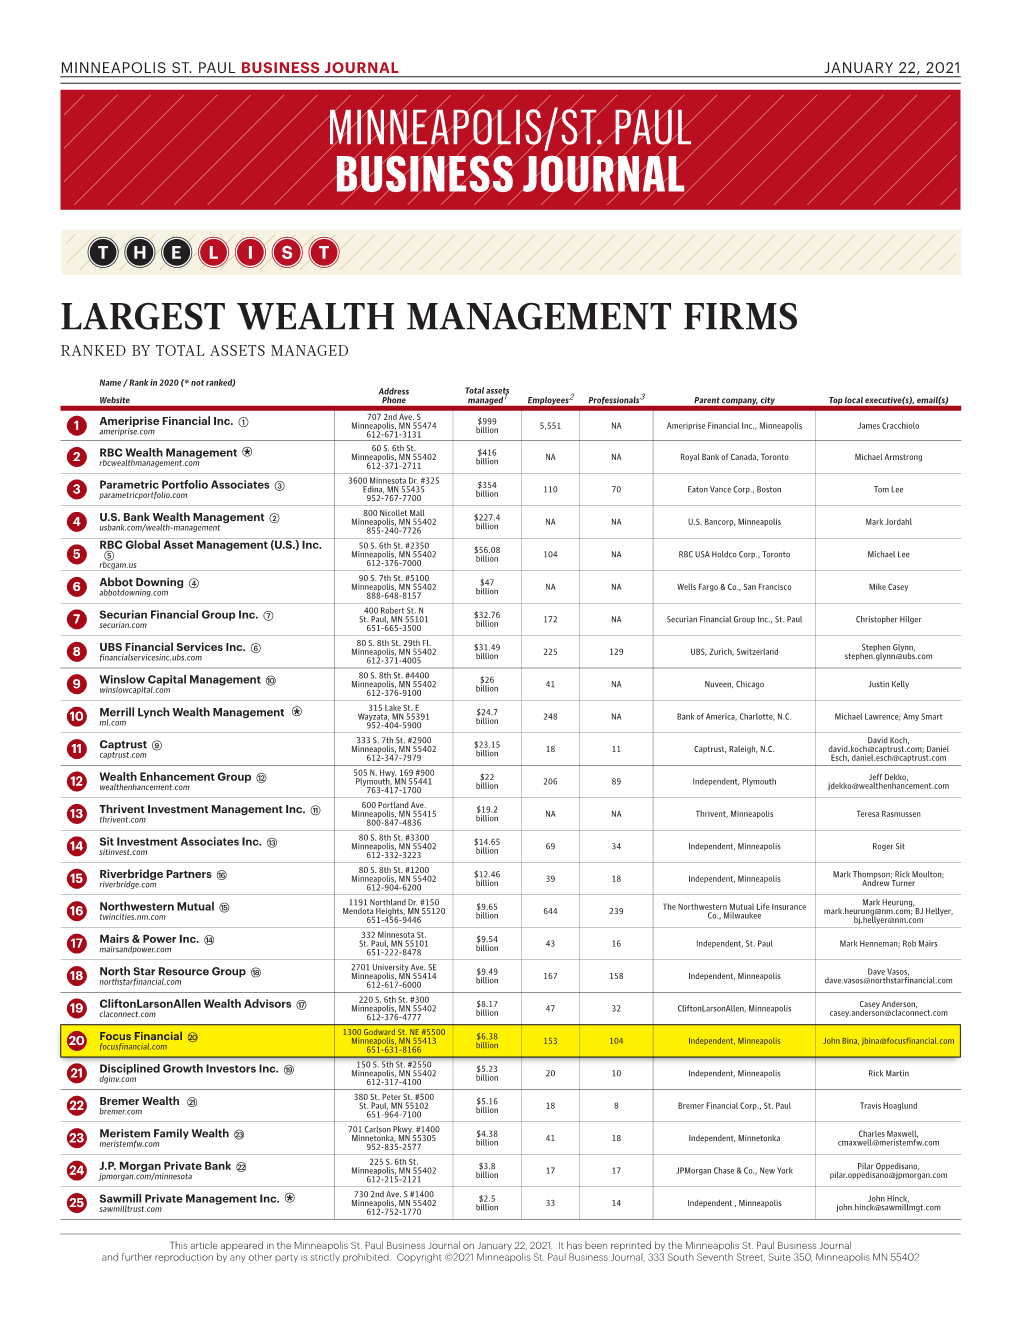 Minneapolis/St. Paul Business Journal's Largest Wealth